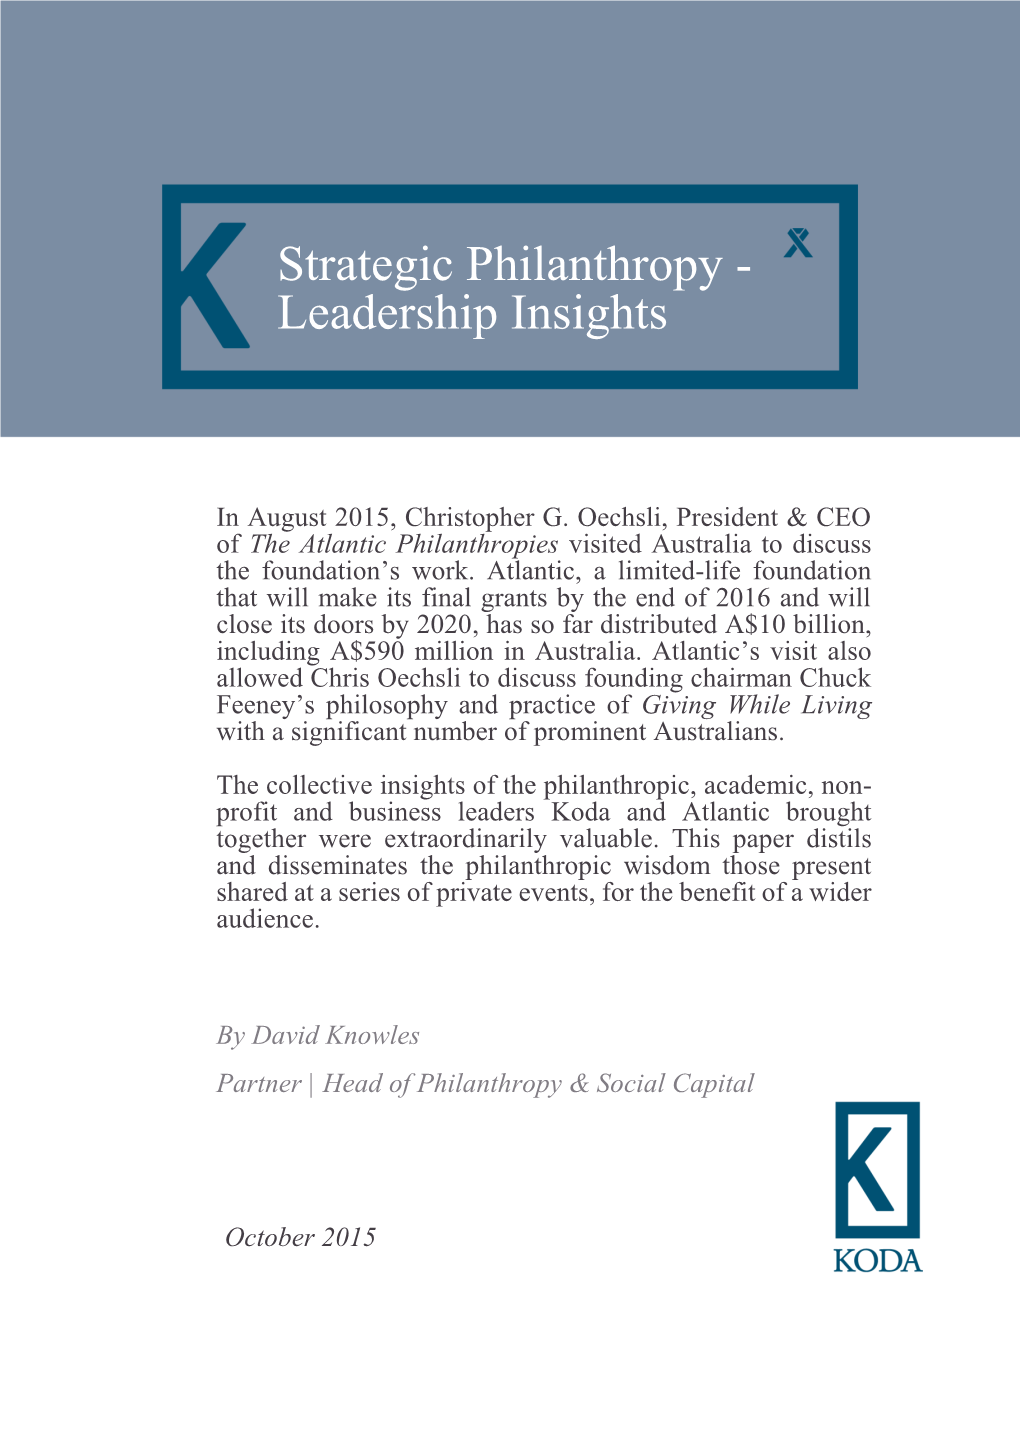 Strategic Philanthropy - Leadership Insights